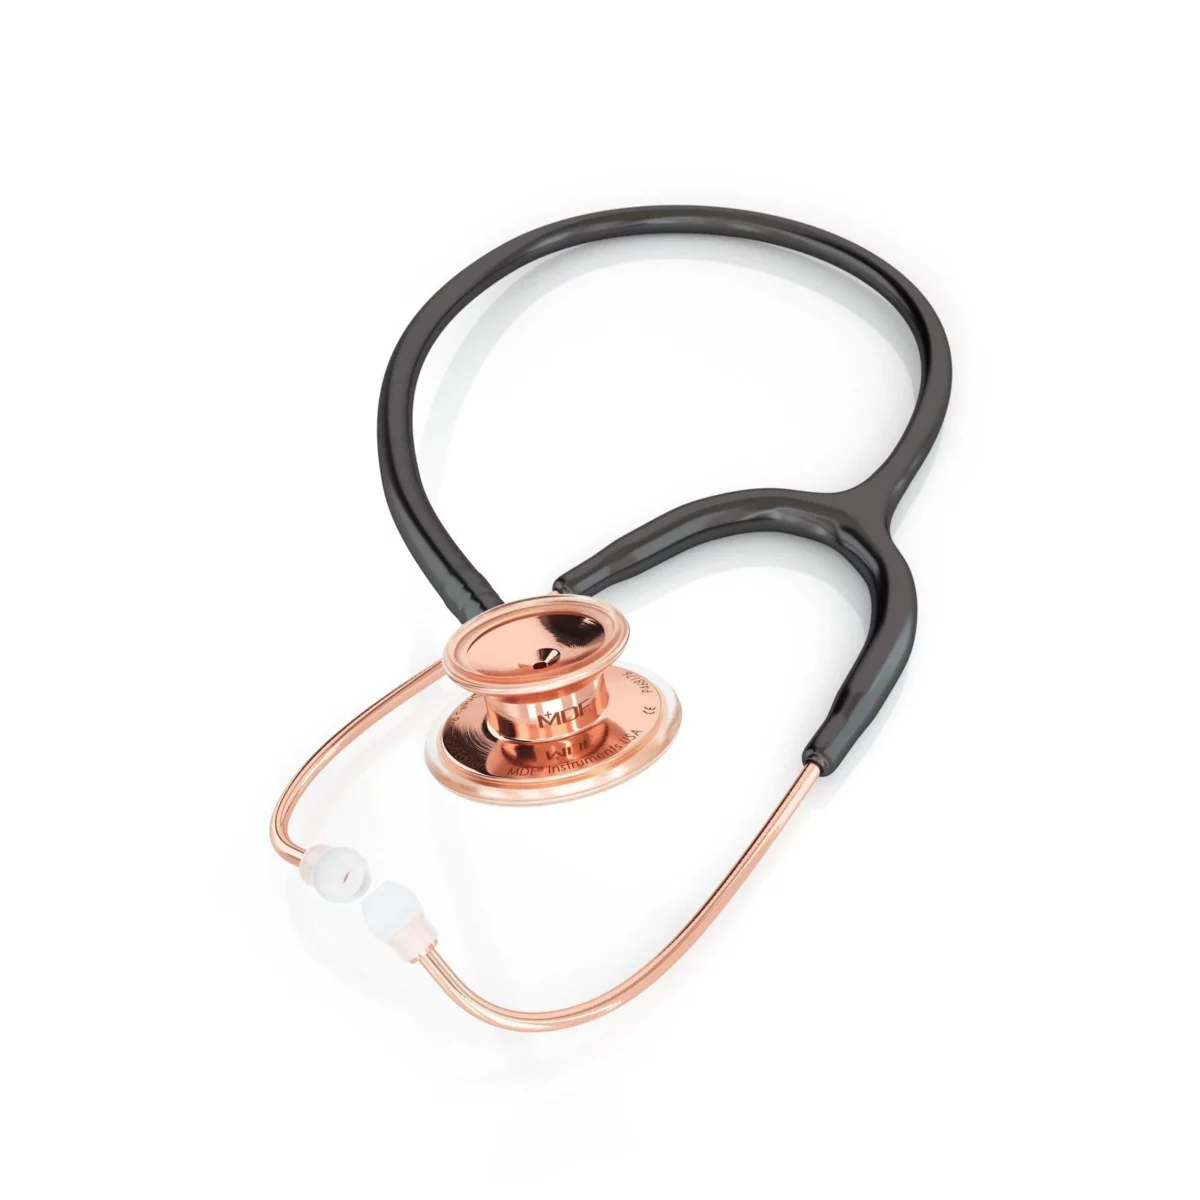 Mdf stethoscope: md one - black & rose gold